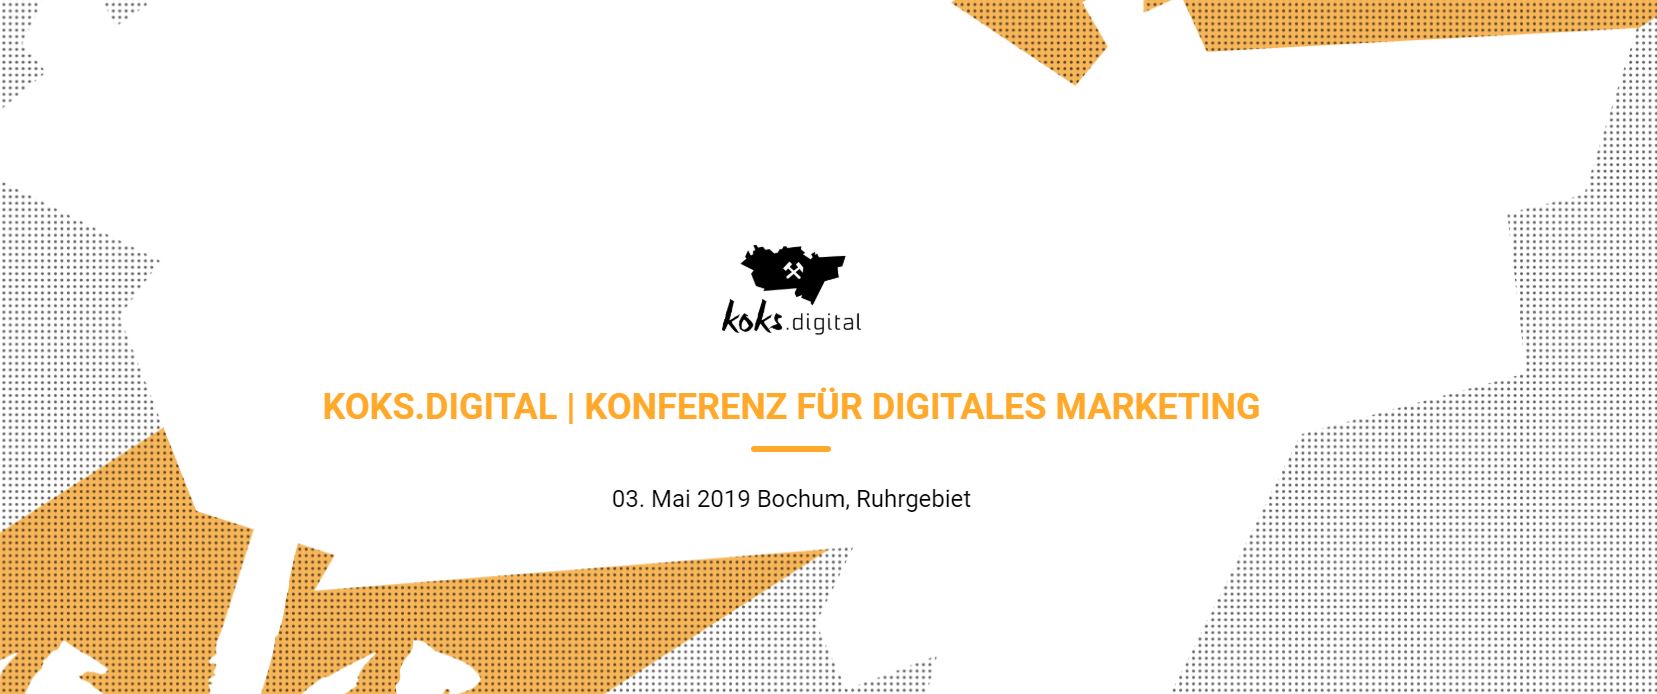 koks.digital | Konferenz für digitales Marketing